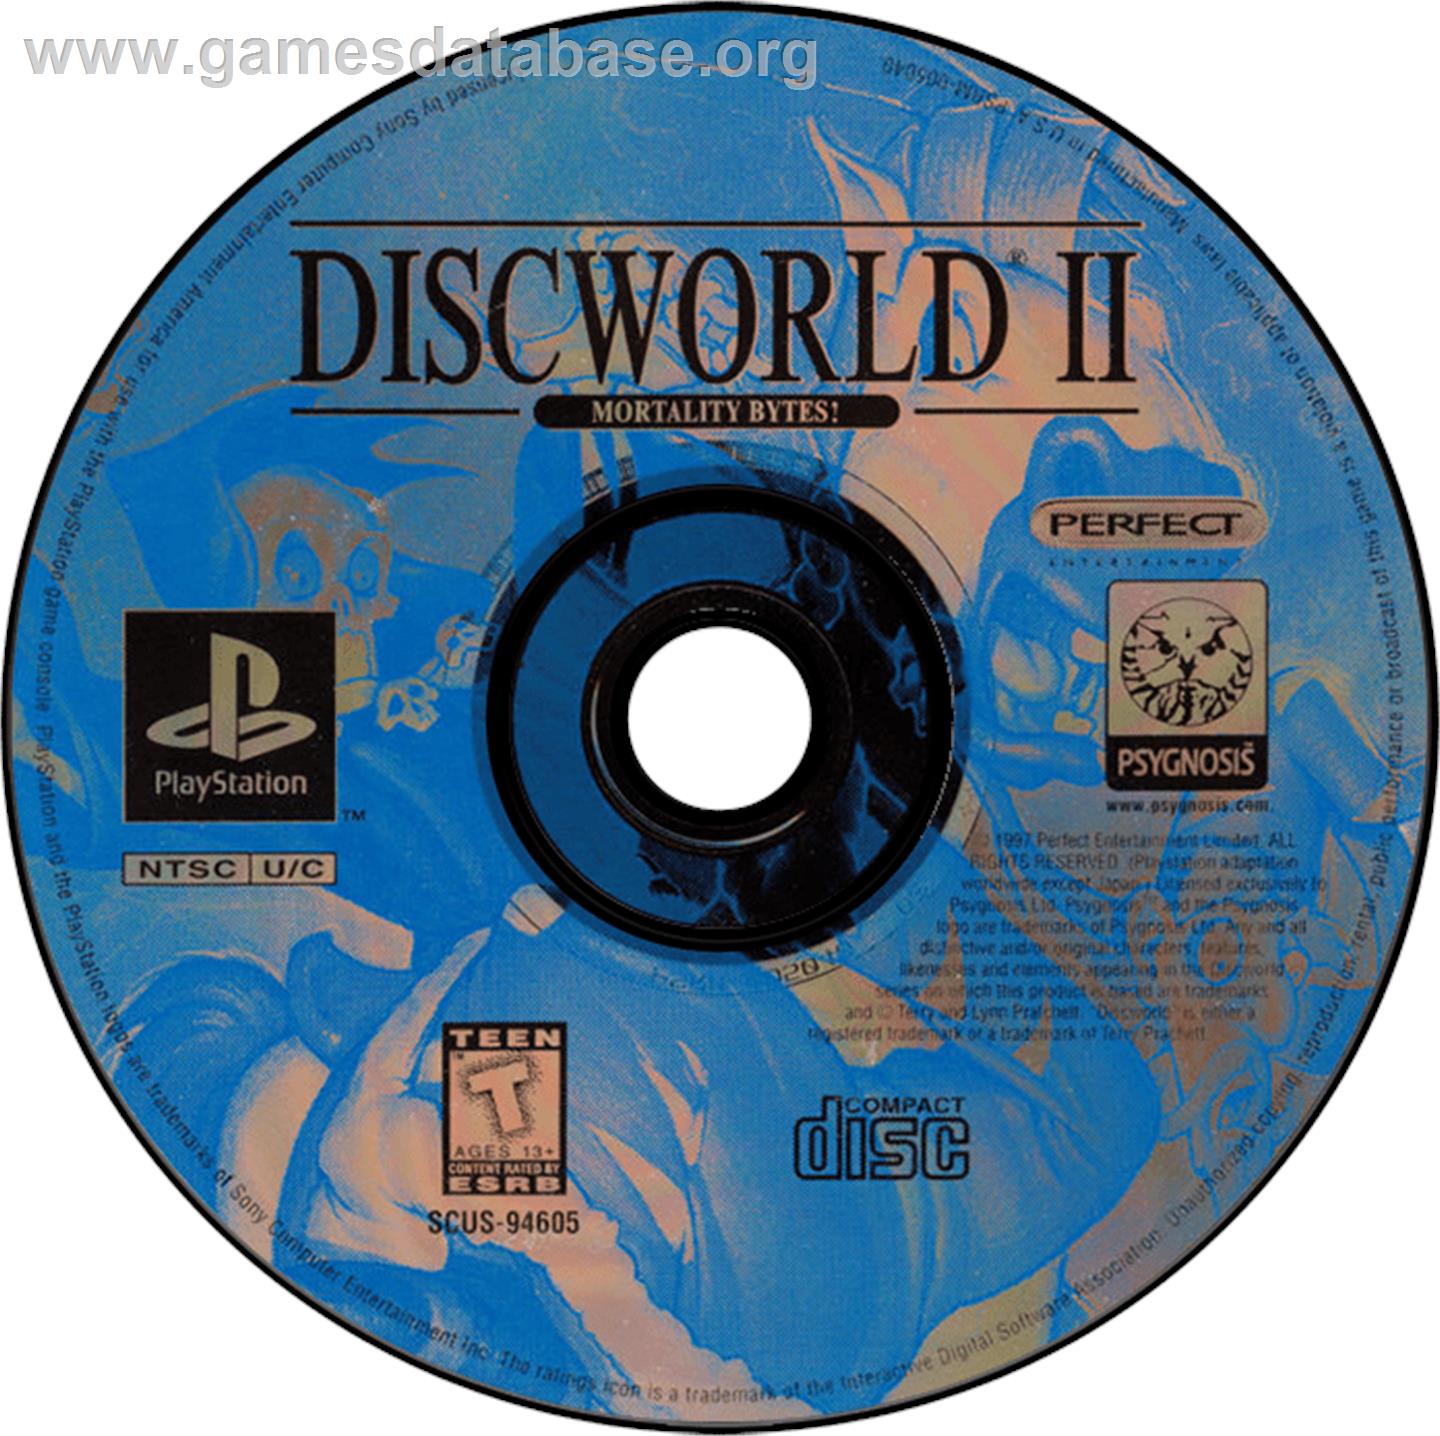 Discworld II: Mortality Bytes! - Sony Playstation - Artwork - Disc